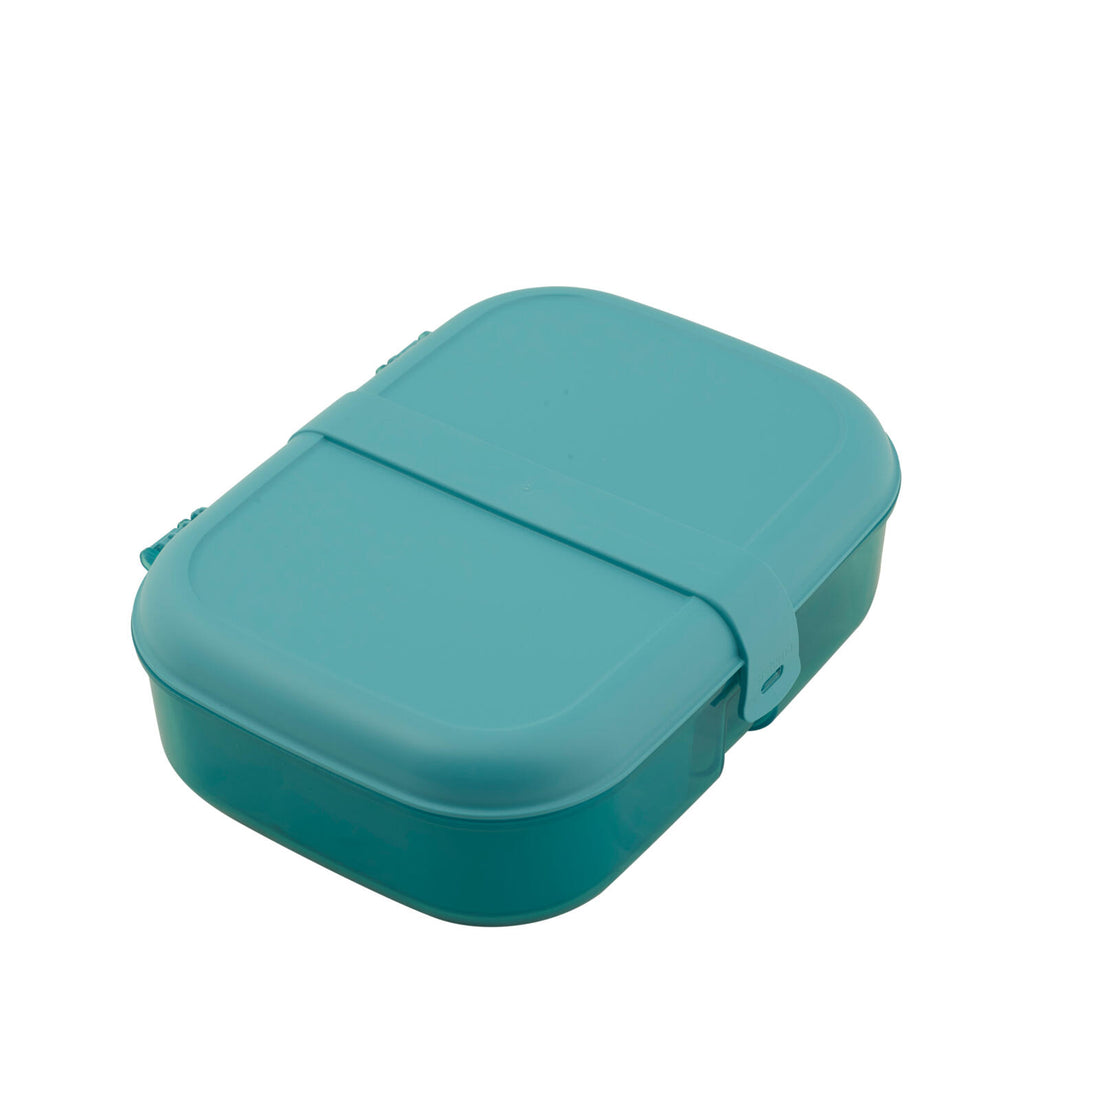 OCEAN BOUND Lunchbox, light blue